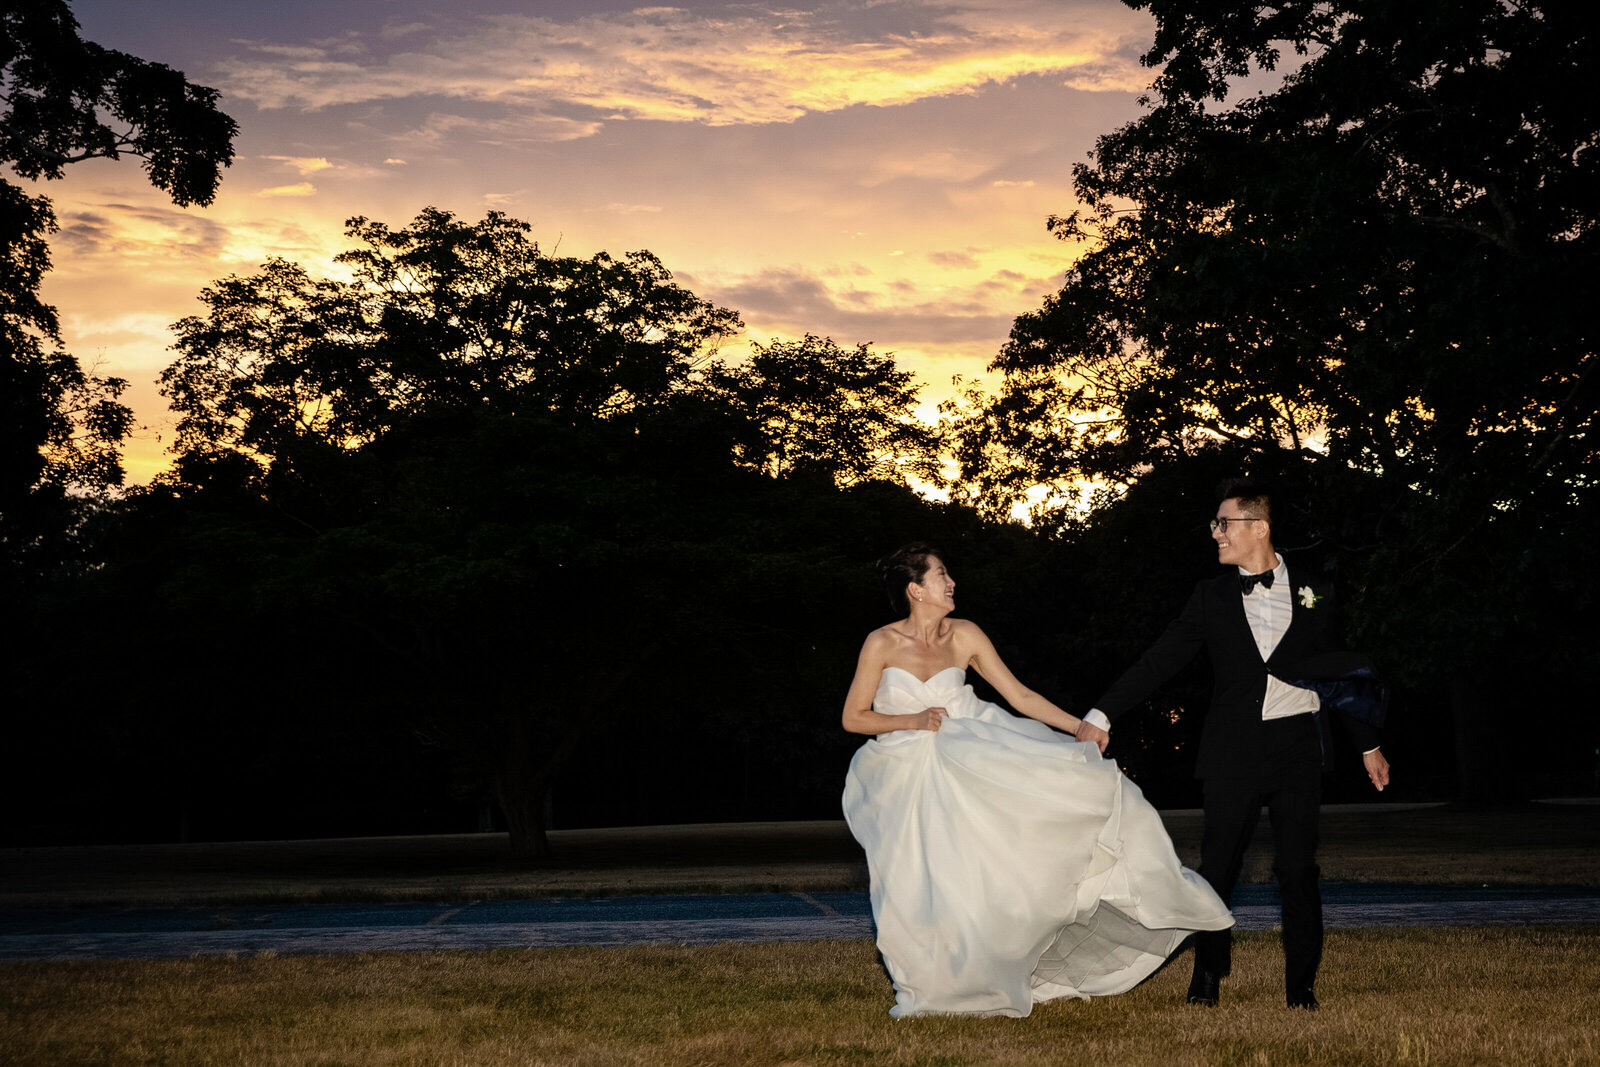 New-England-Wedding-Photographer-Sabrina-Scolari-98